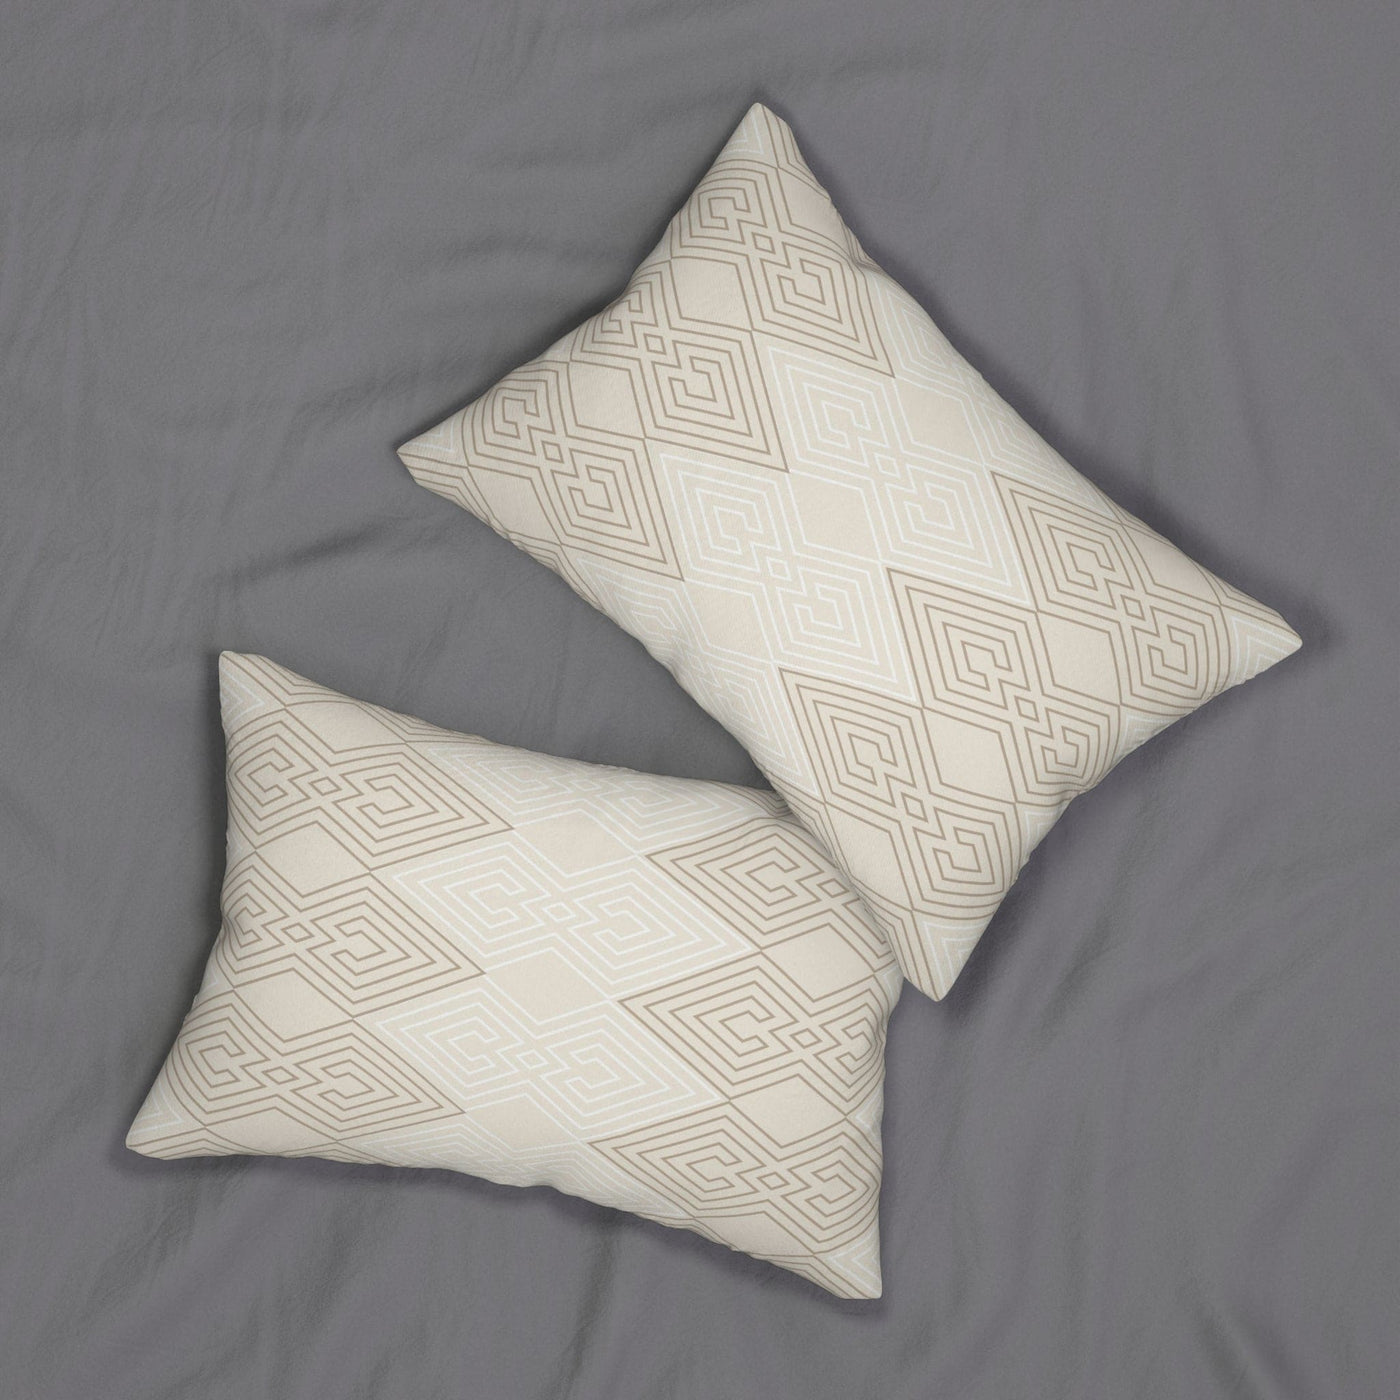 Decorative Lumbar Throw Pillow - Beige And White Tribal Geometric Aztec Print